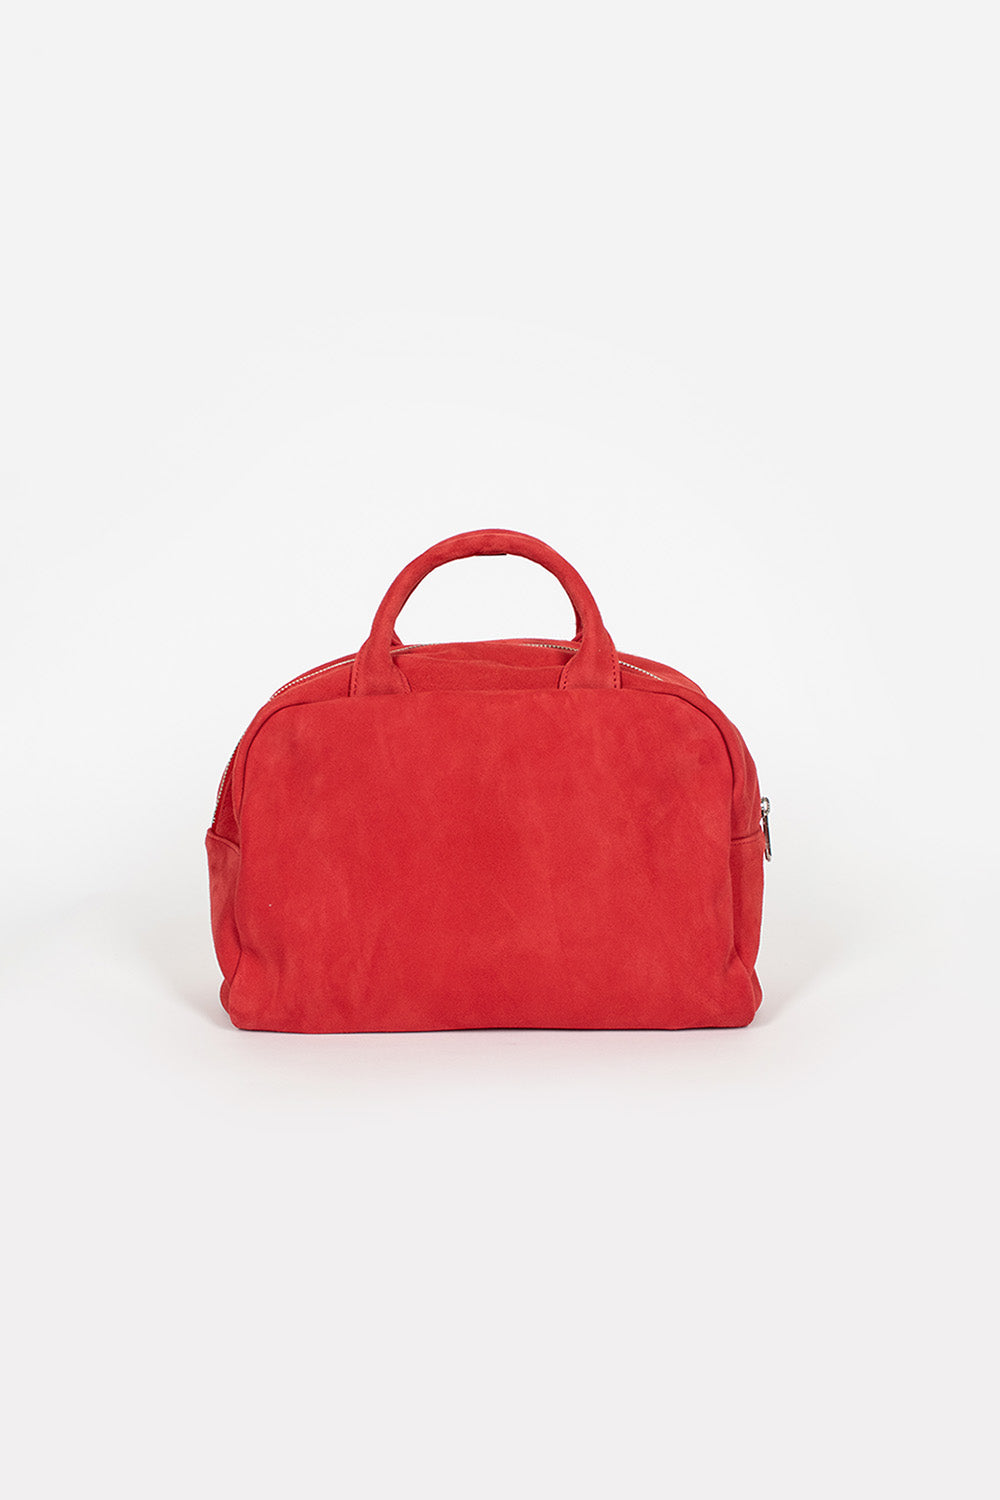 Sheepskin Handbag Red